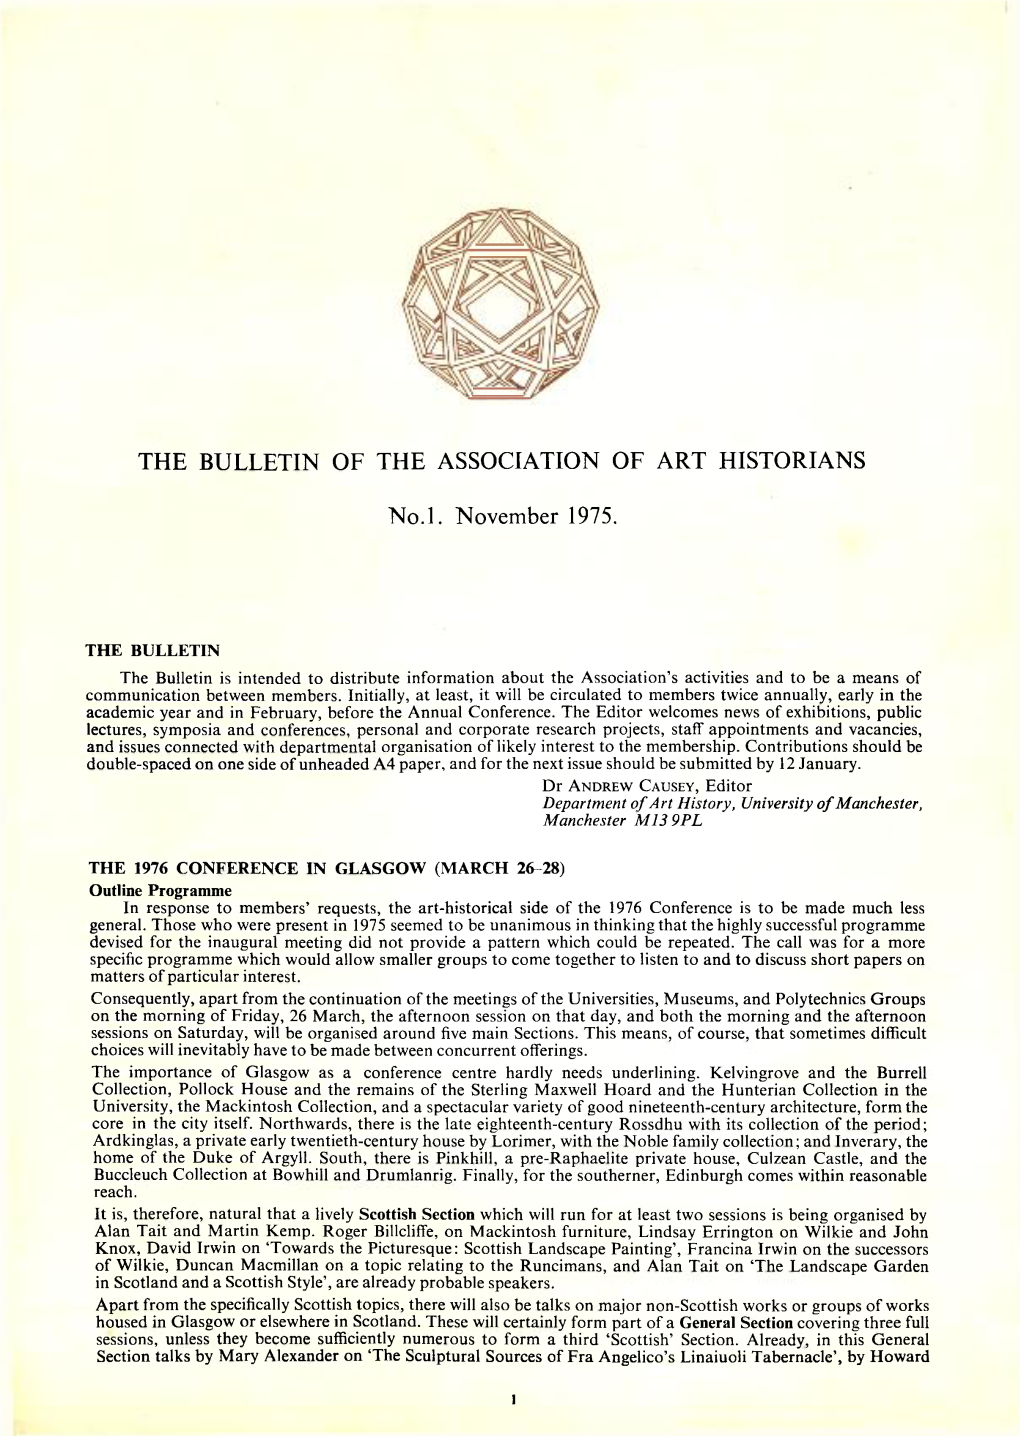 THE BULLETIN of the ASSOCIATION of ART HISTORIANS No.L. November 1975